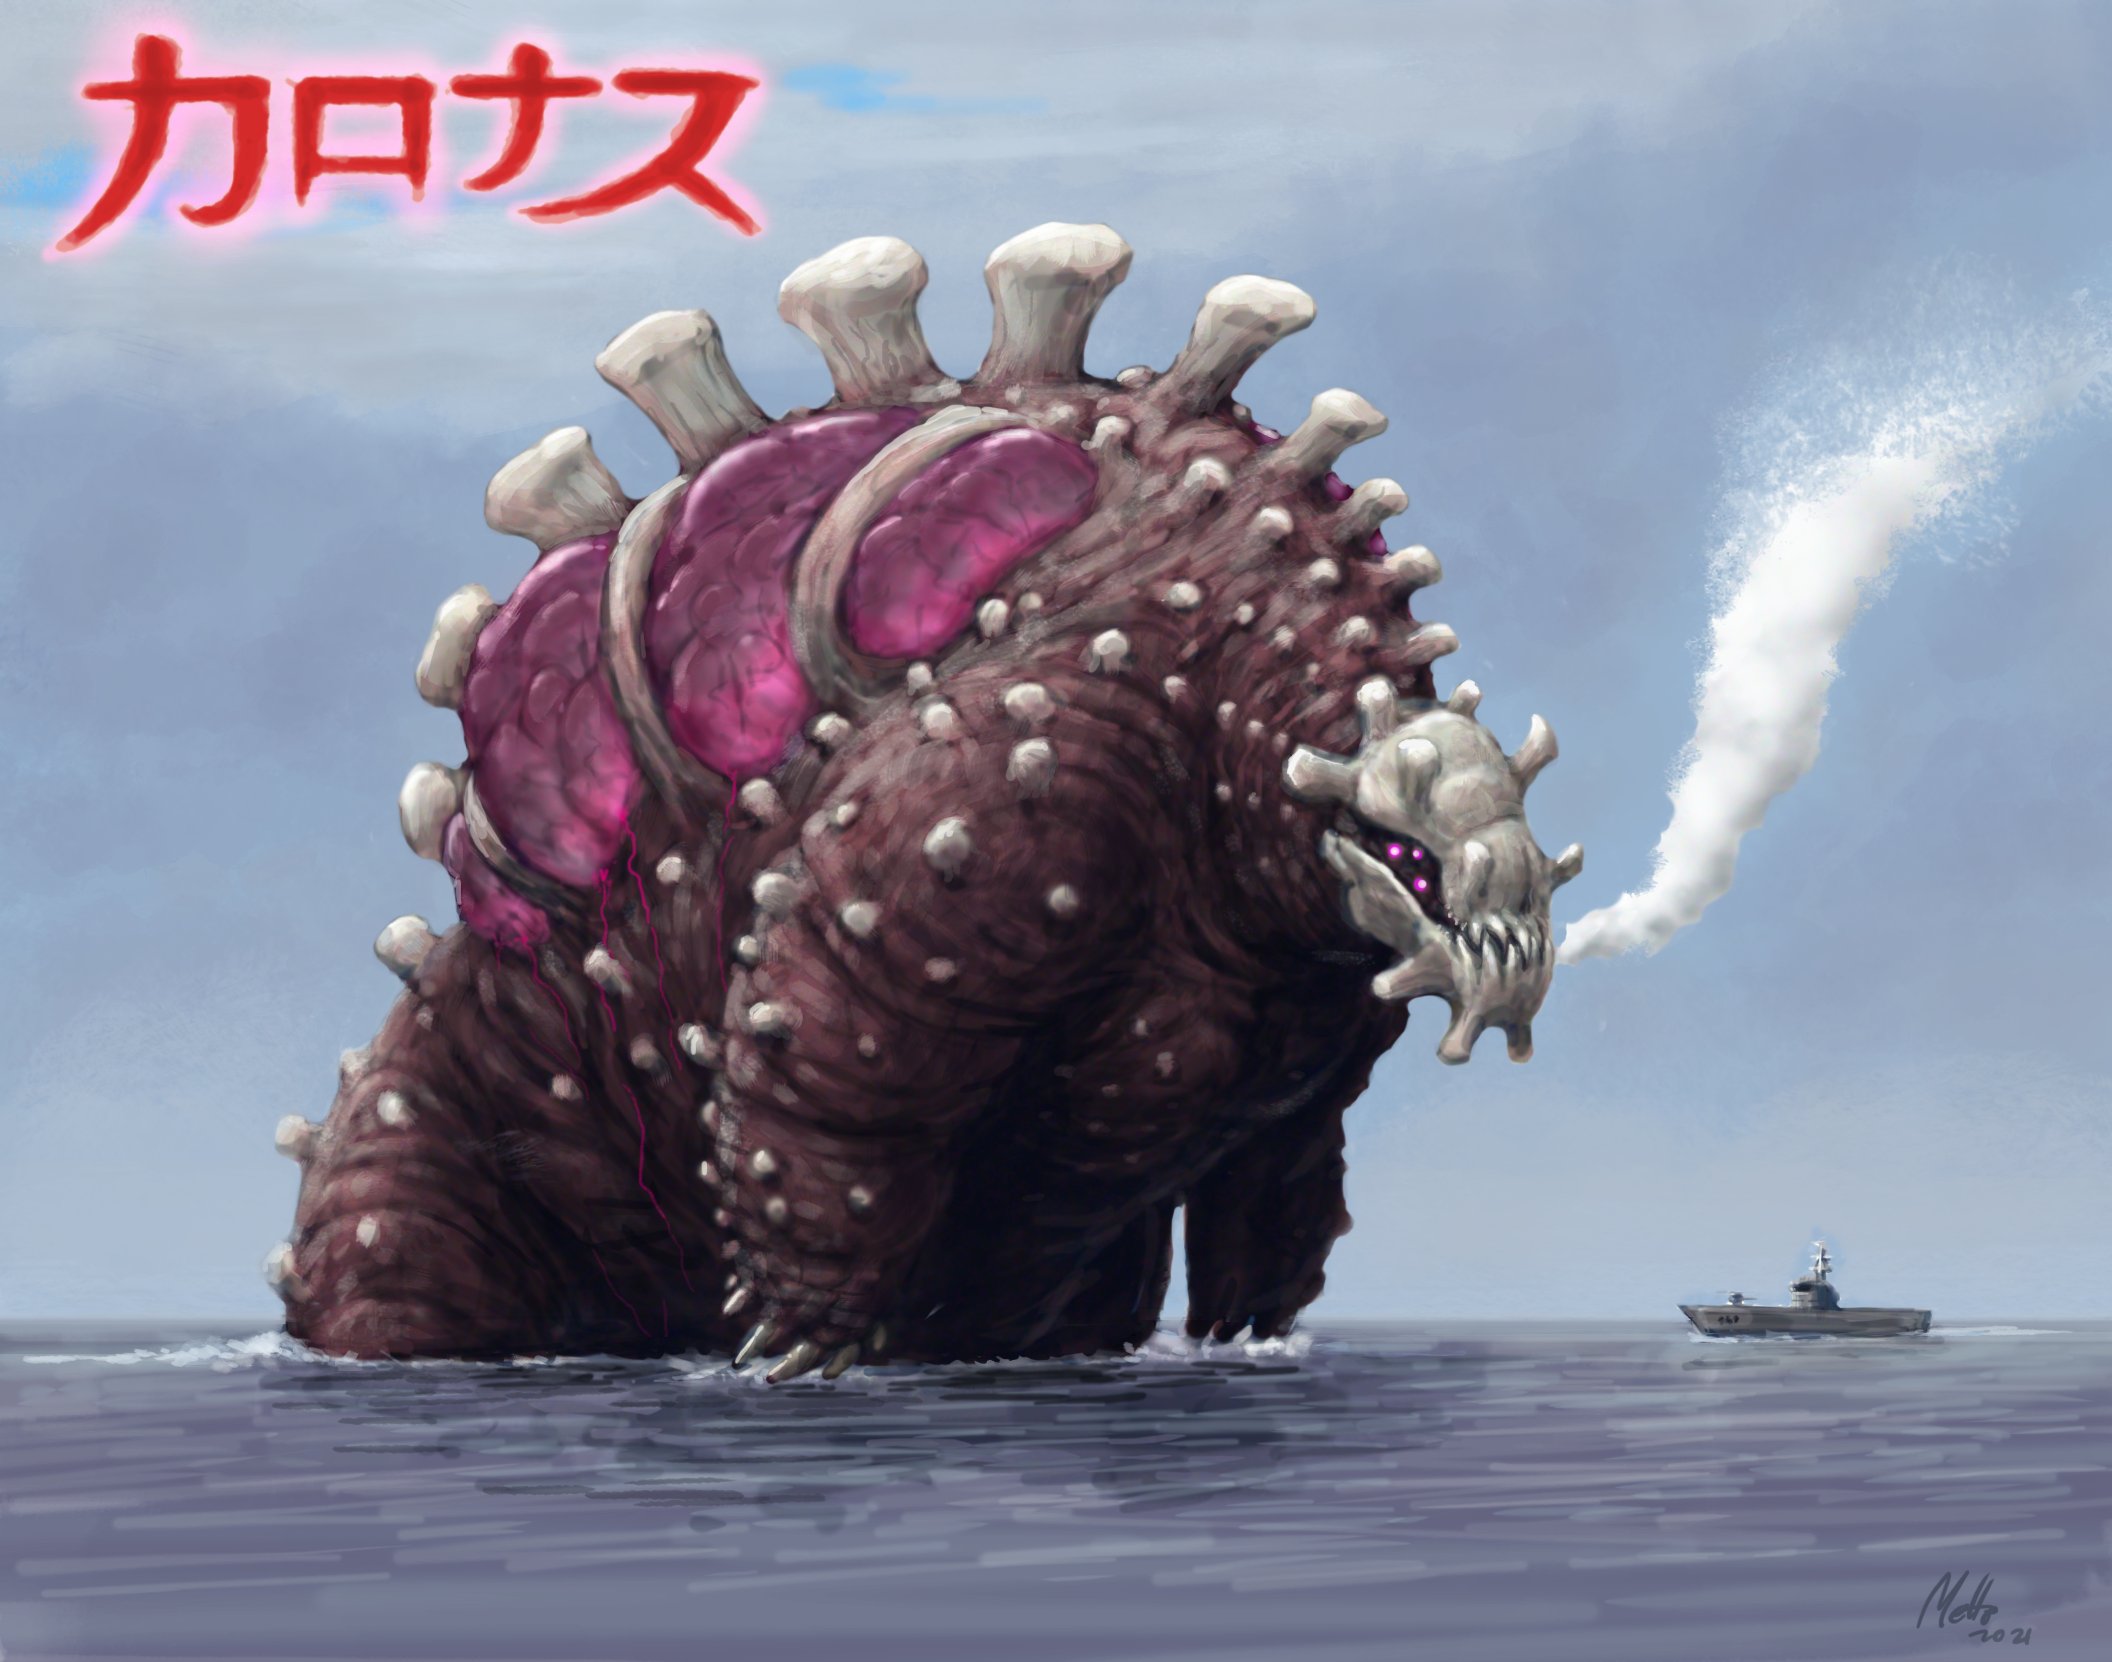 Random Godzilla/Kaiju Fanart - Page 35 - Toho Kingdom